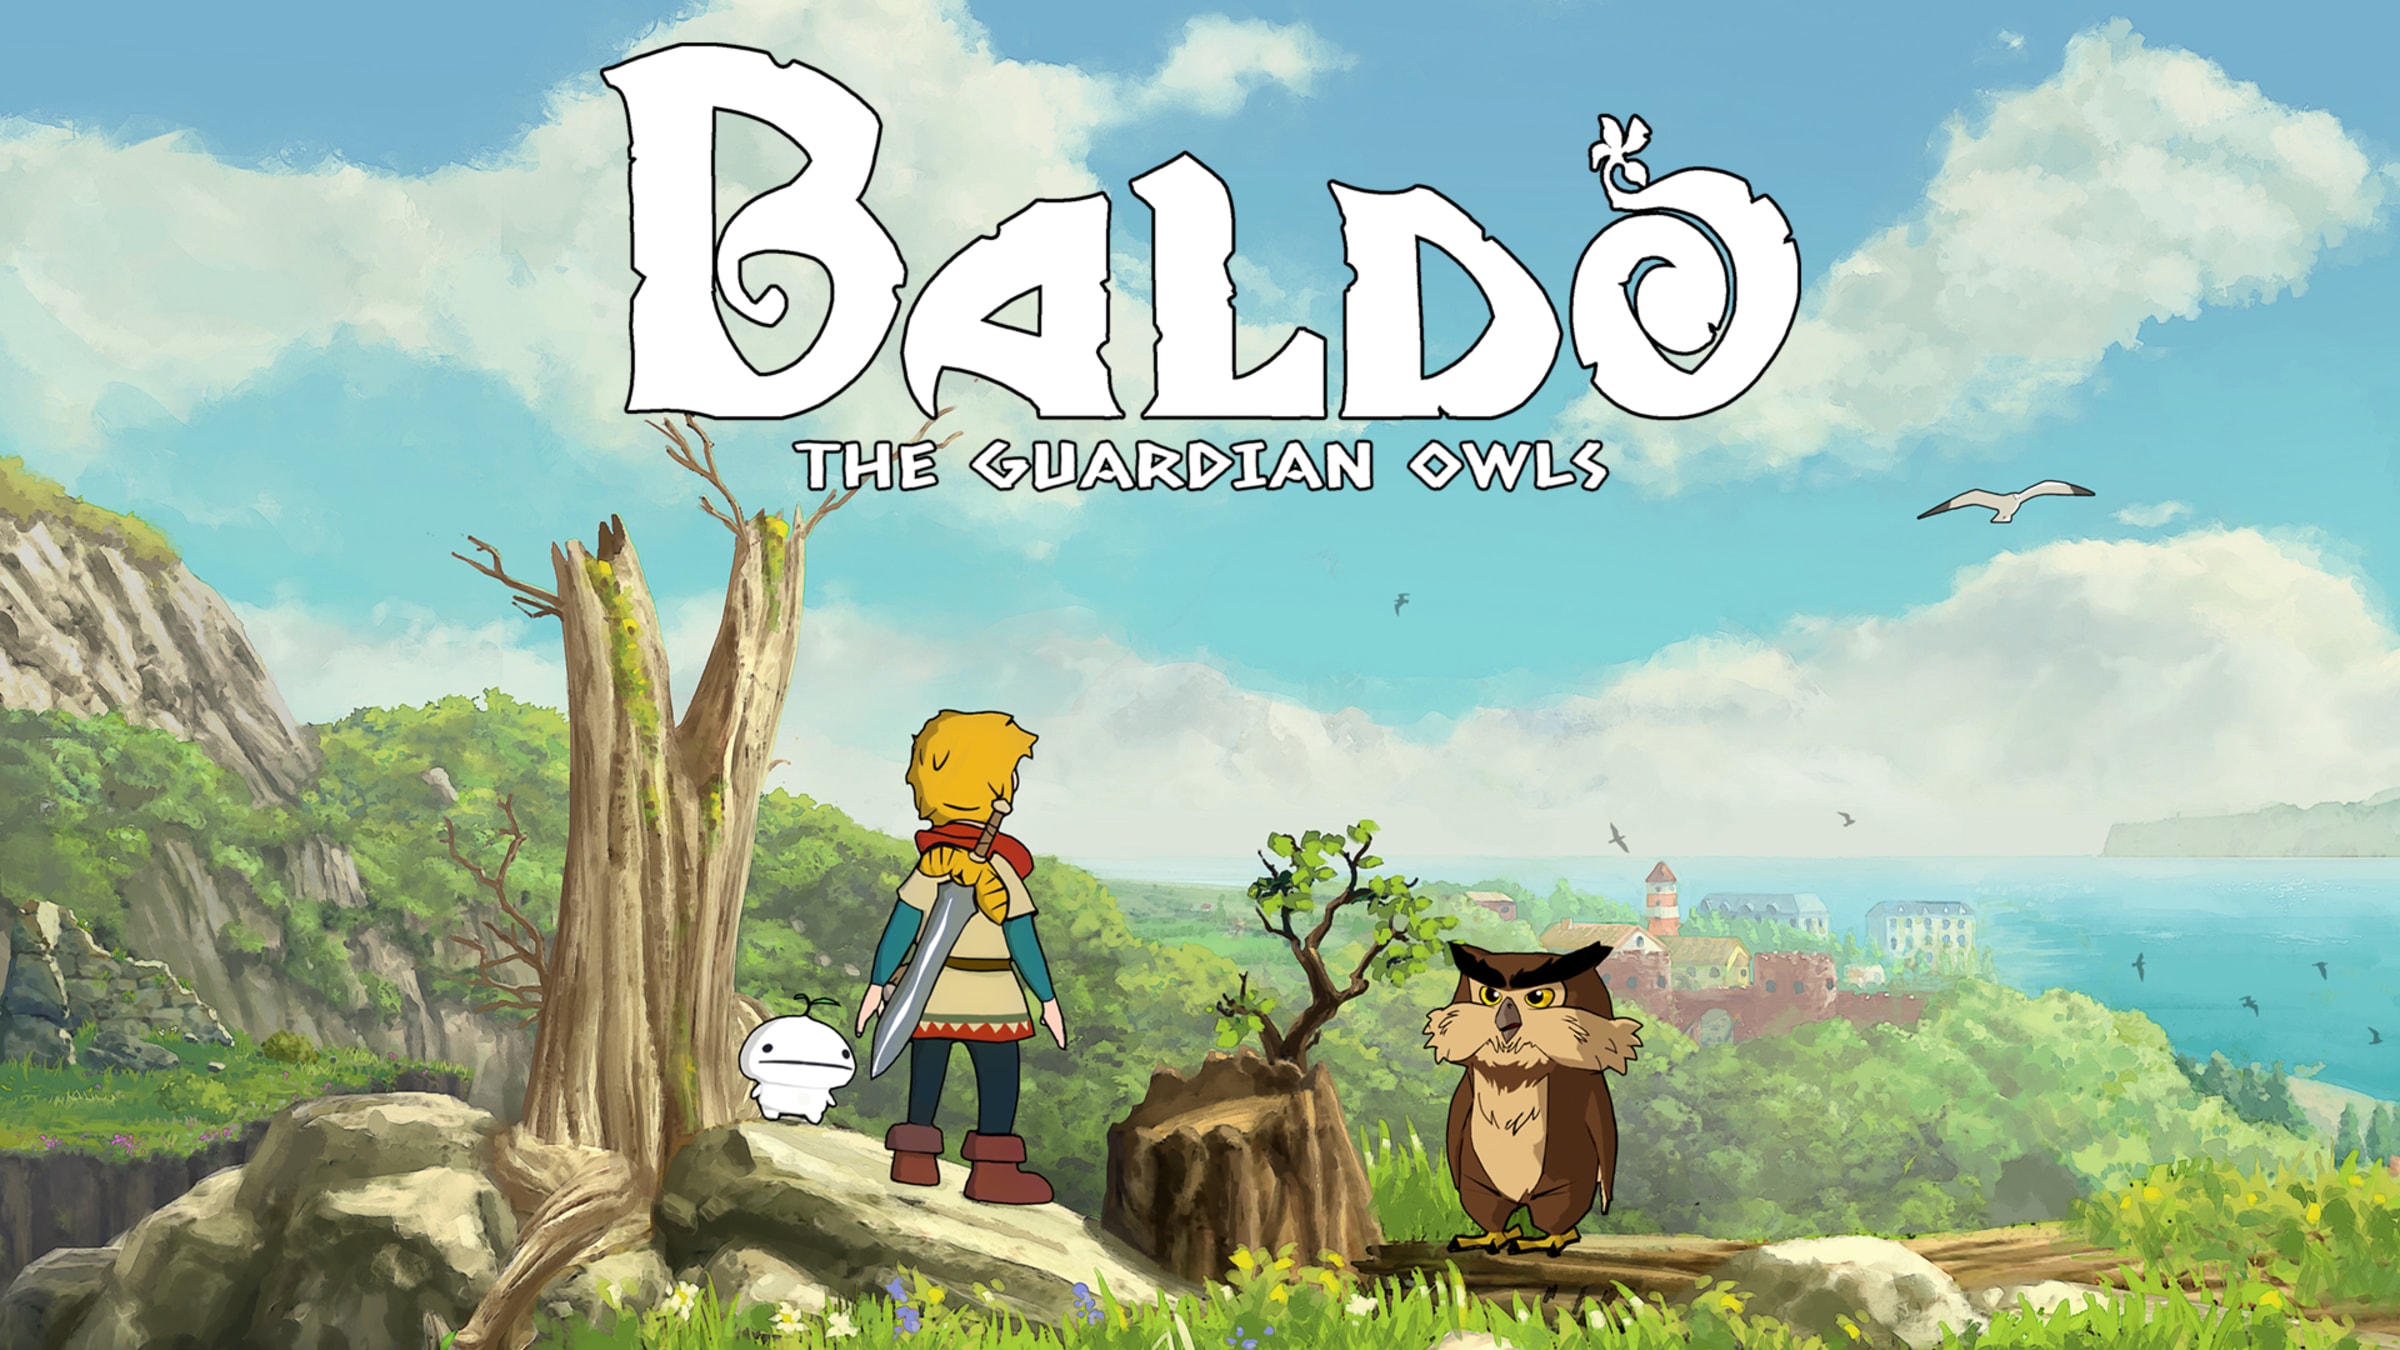 Baldo, The guardian owls